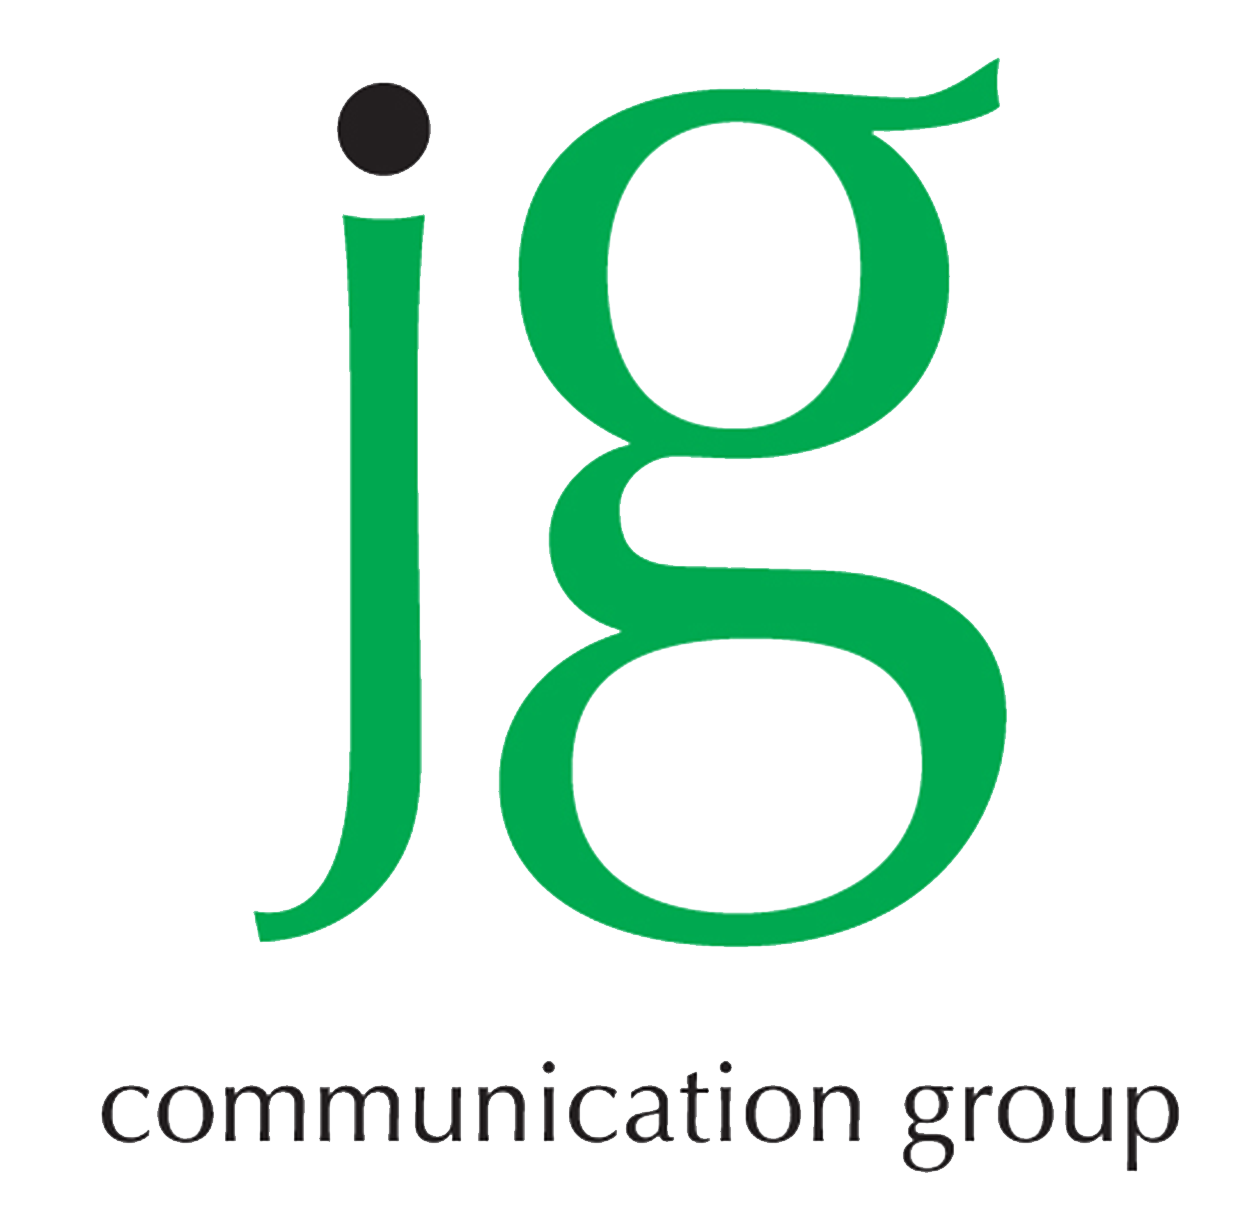 JG Communication Group